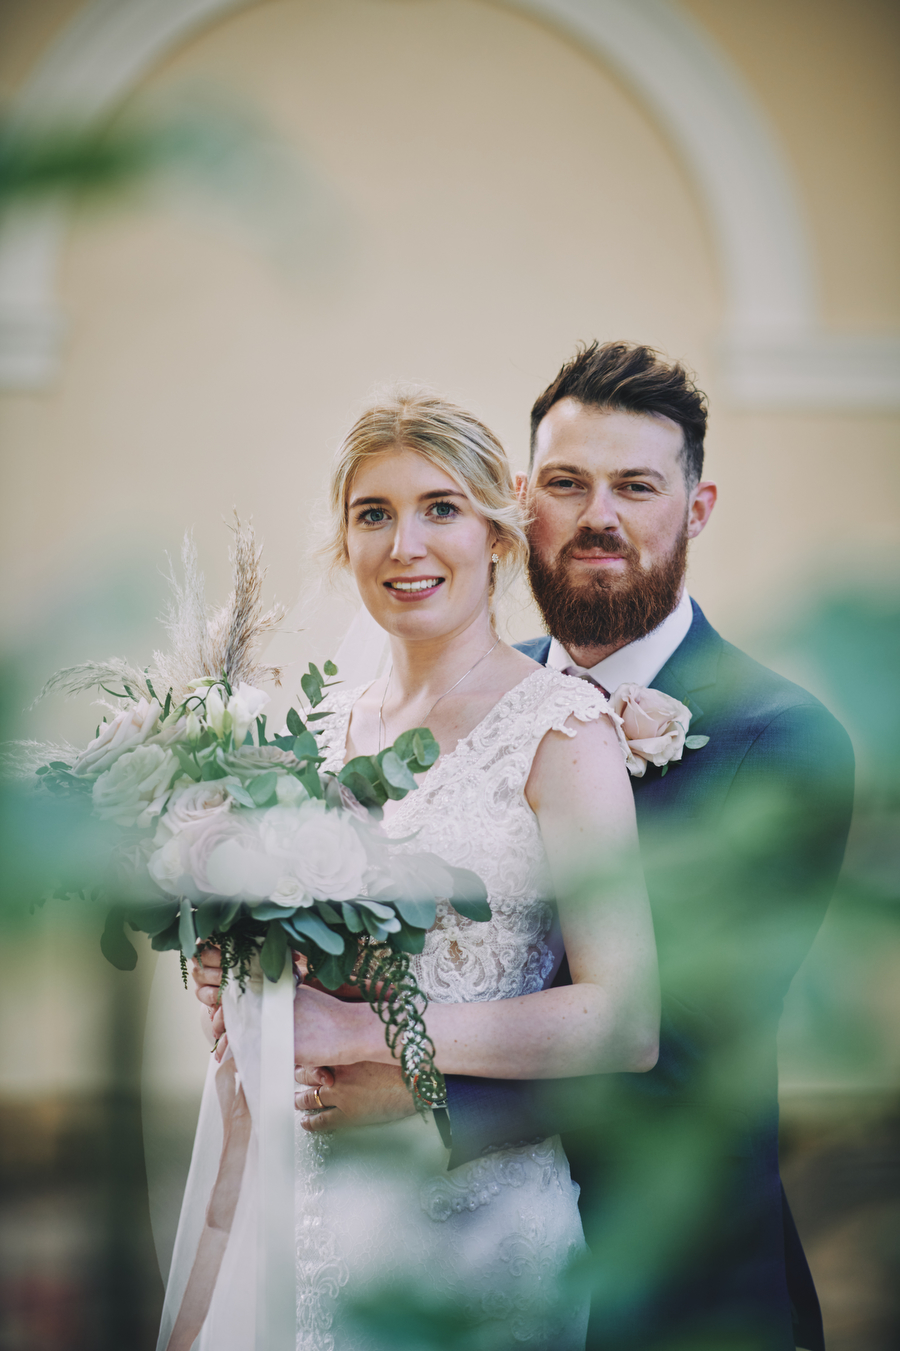 Caitlin & Daniel's beautiful vintage wedding in Harrogate, with Bethany Clarke Wedding Photography (6)